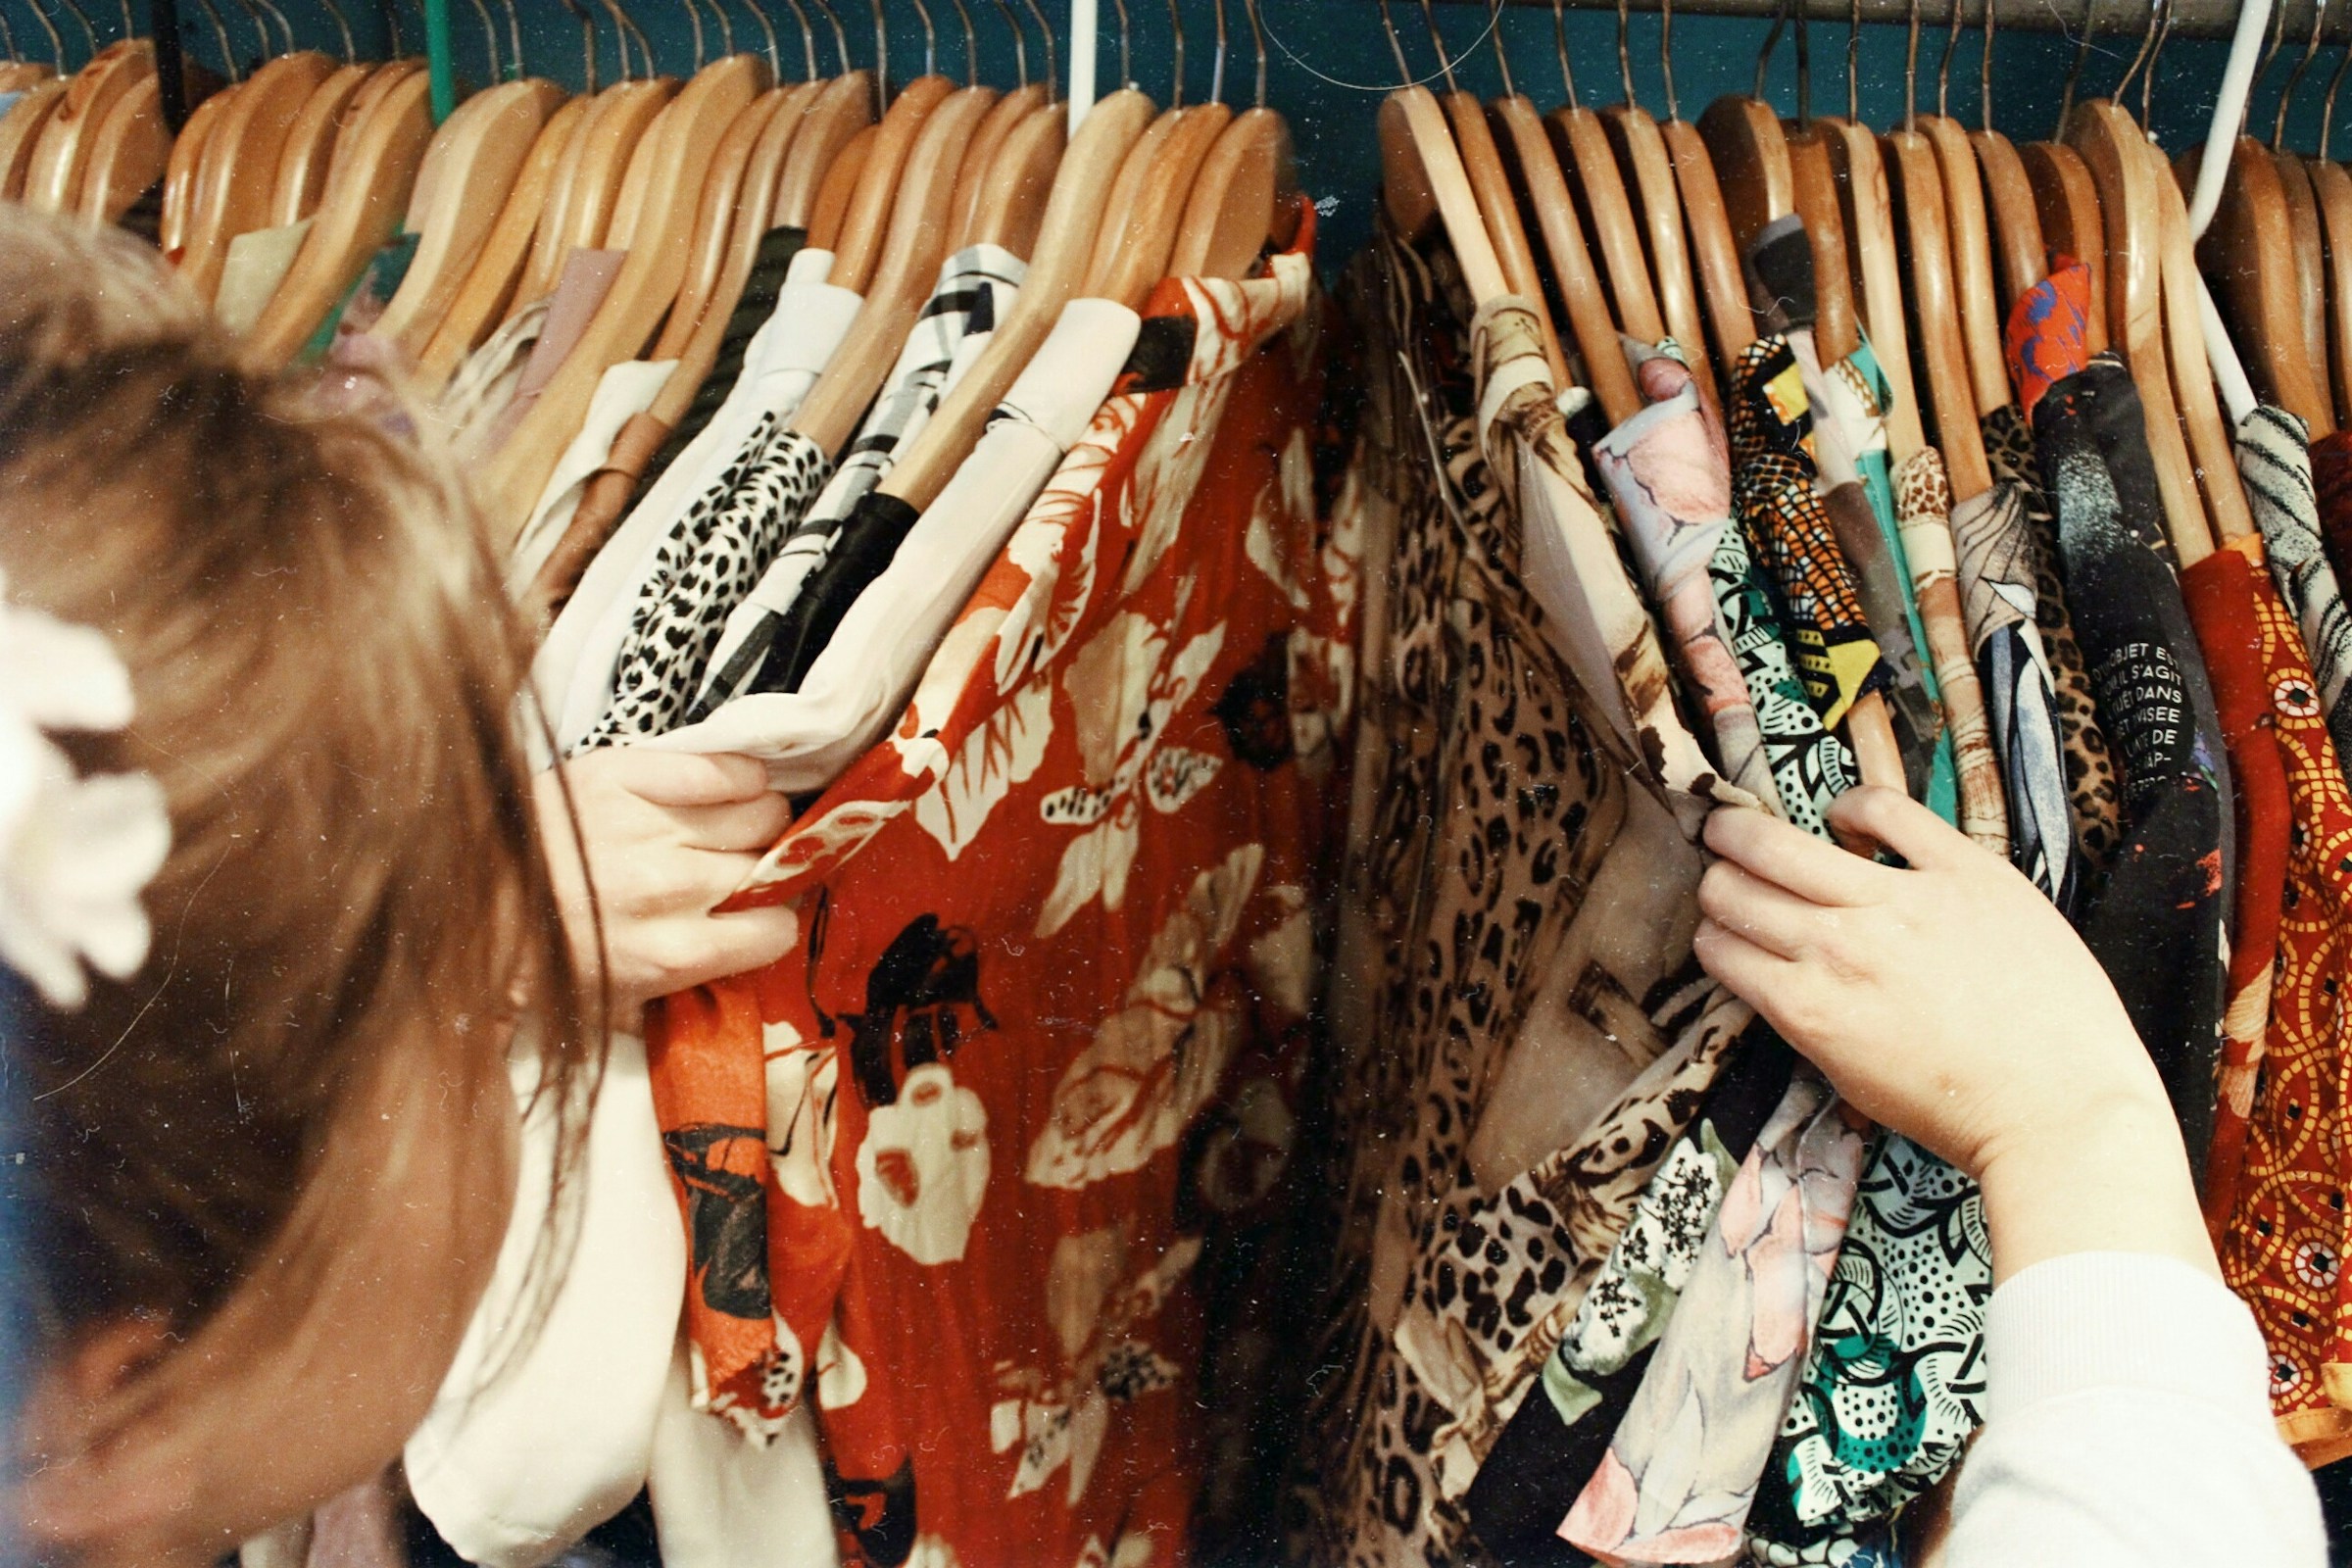 A woman dress shopping | Source: Unsplash